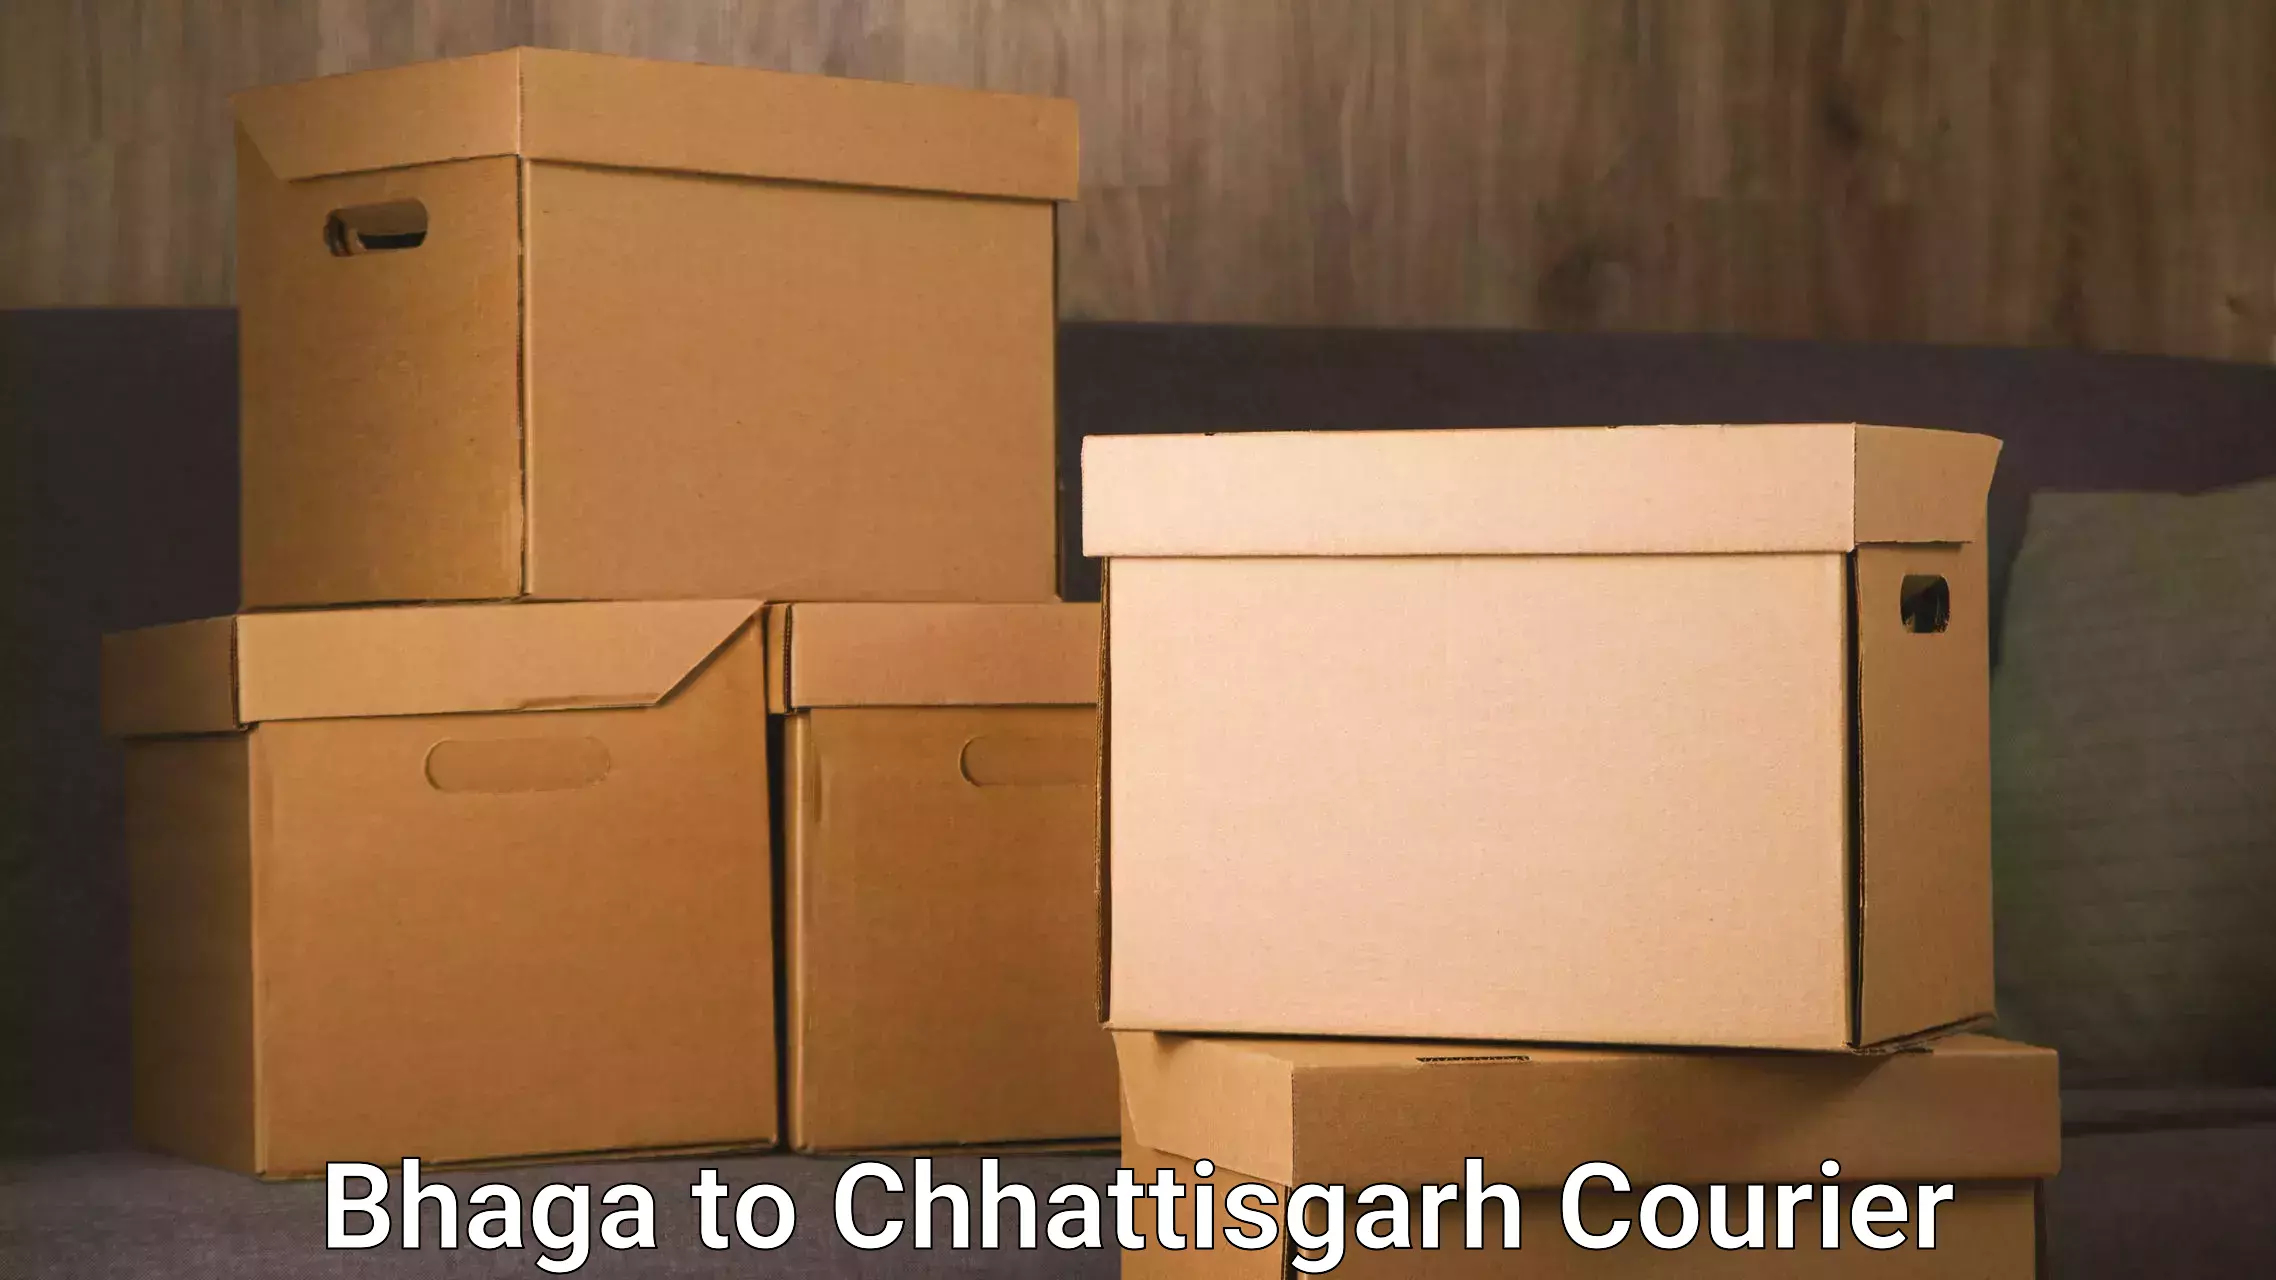 Efficient package consolidation Bhaga to Patna Chhattisgarh